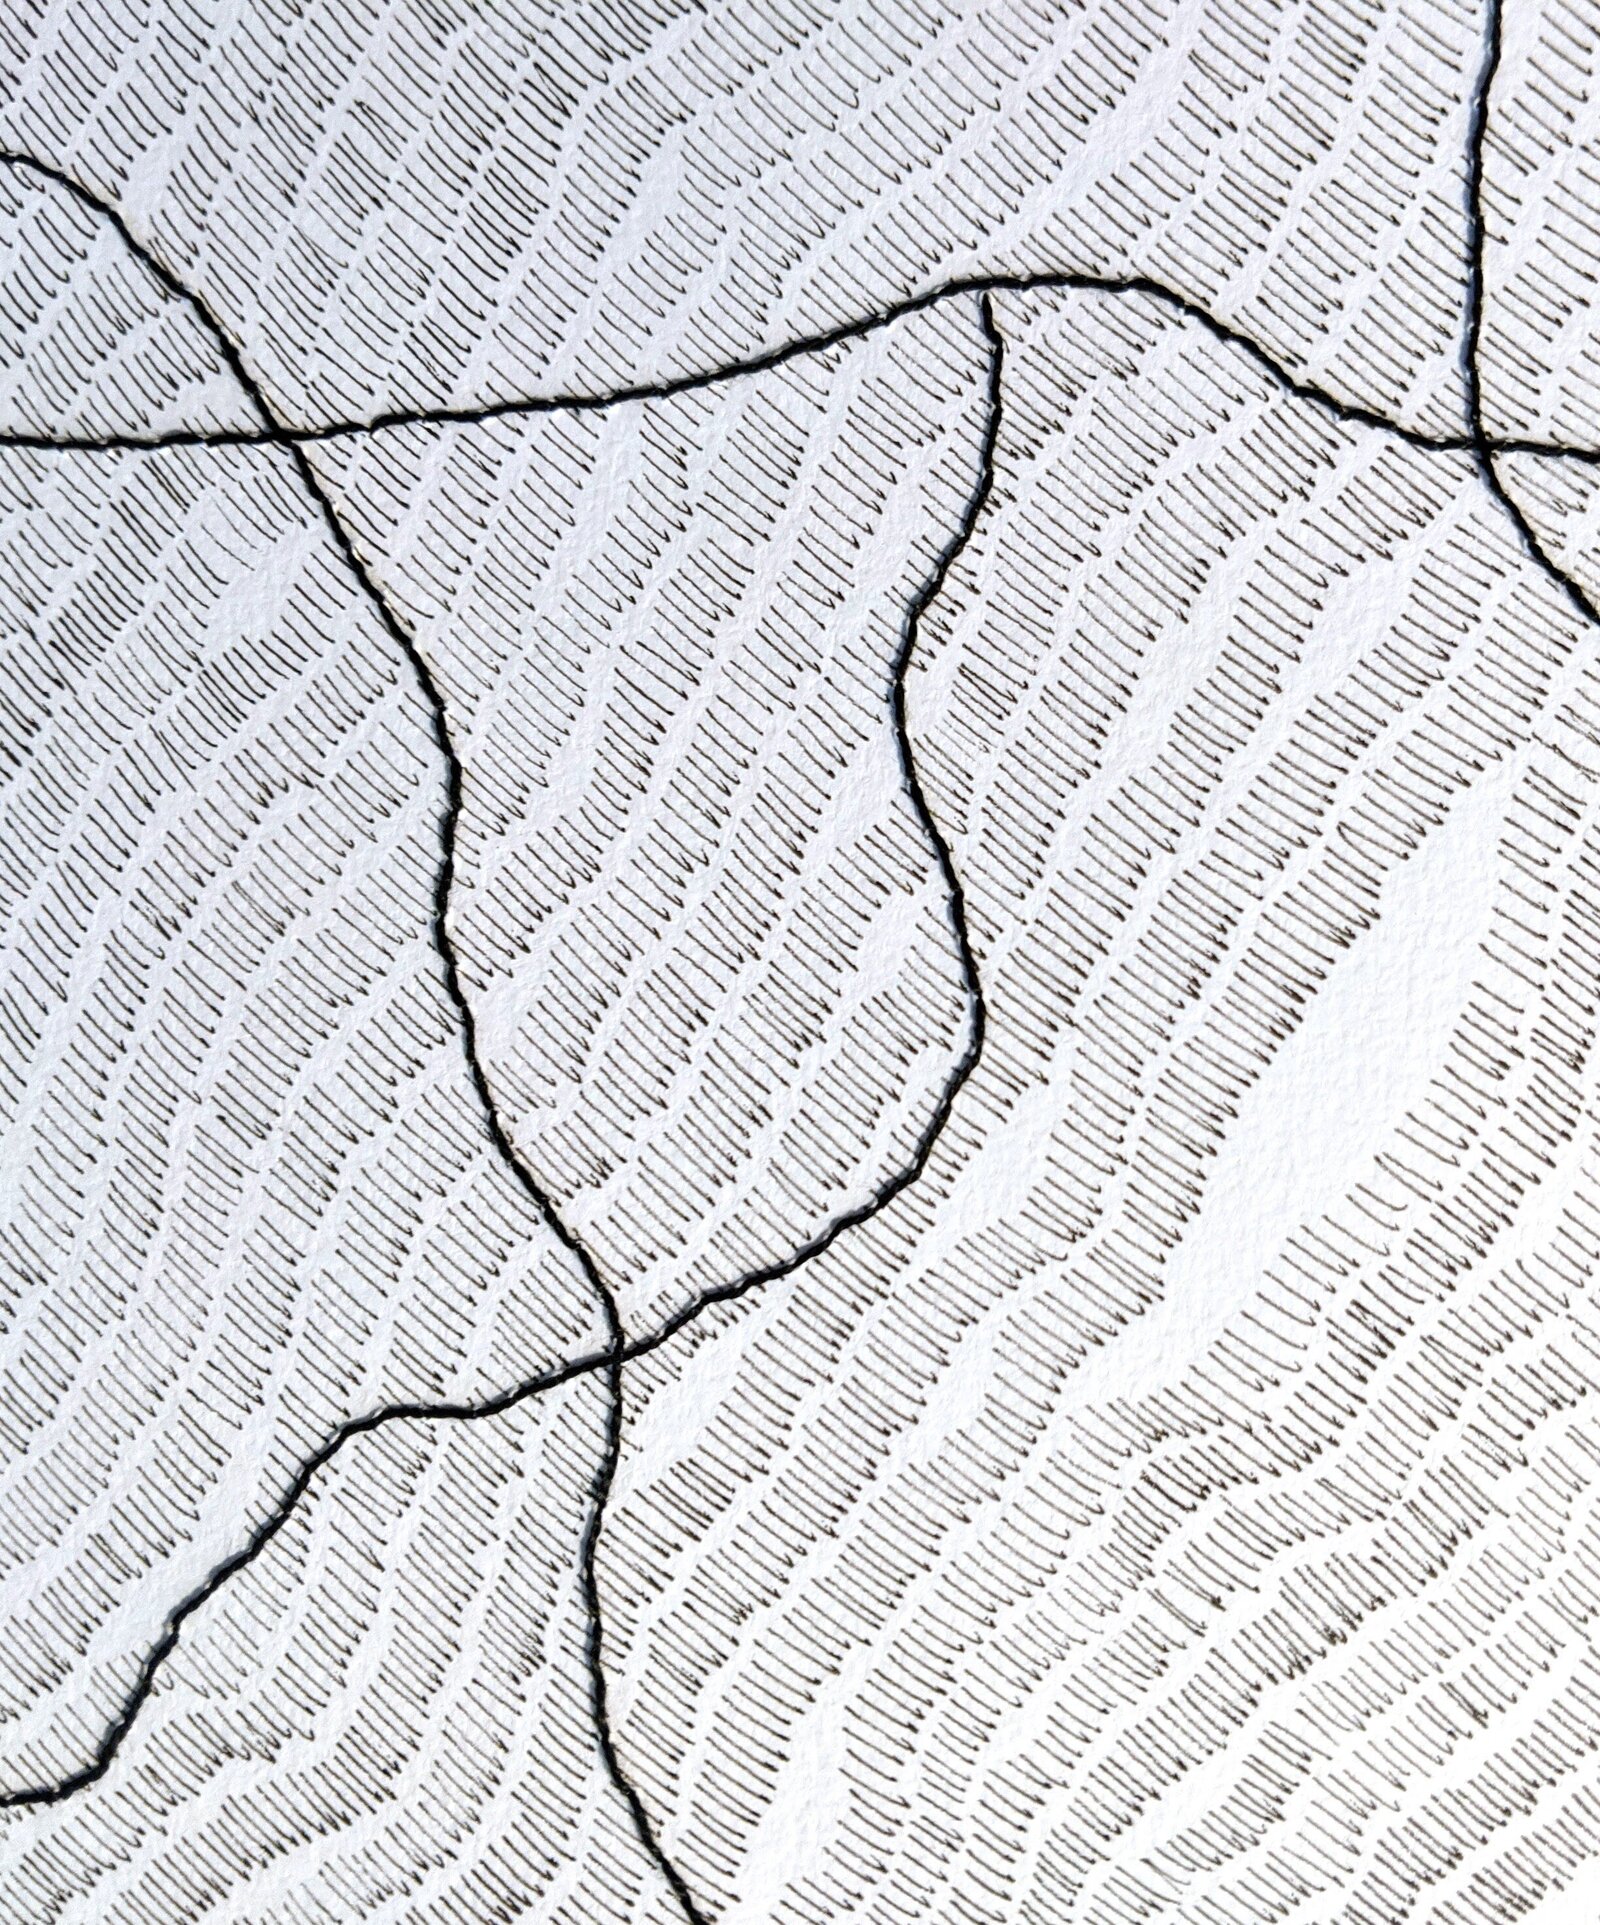 Black stem stitches over short, black pen marks on white paper. Art by Hannah de Keijzer.